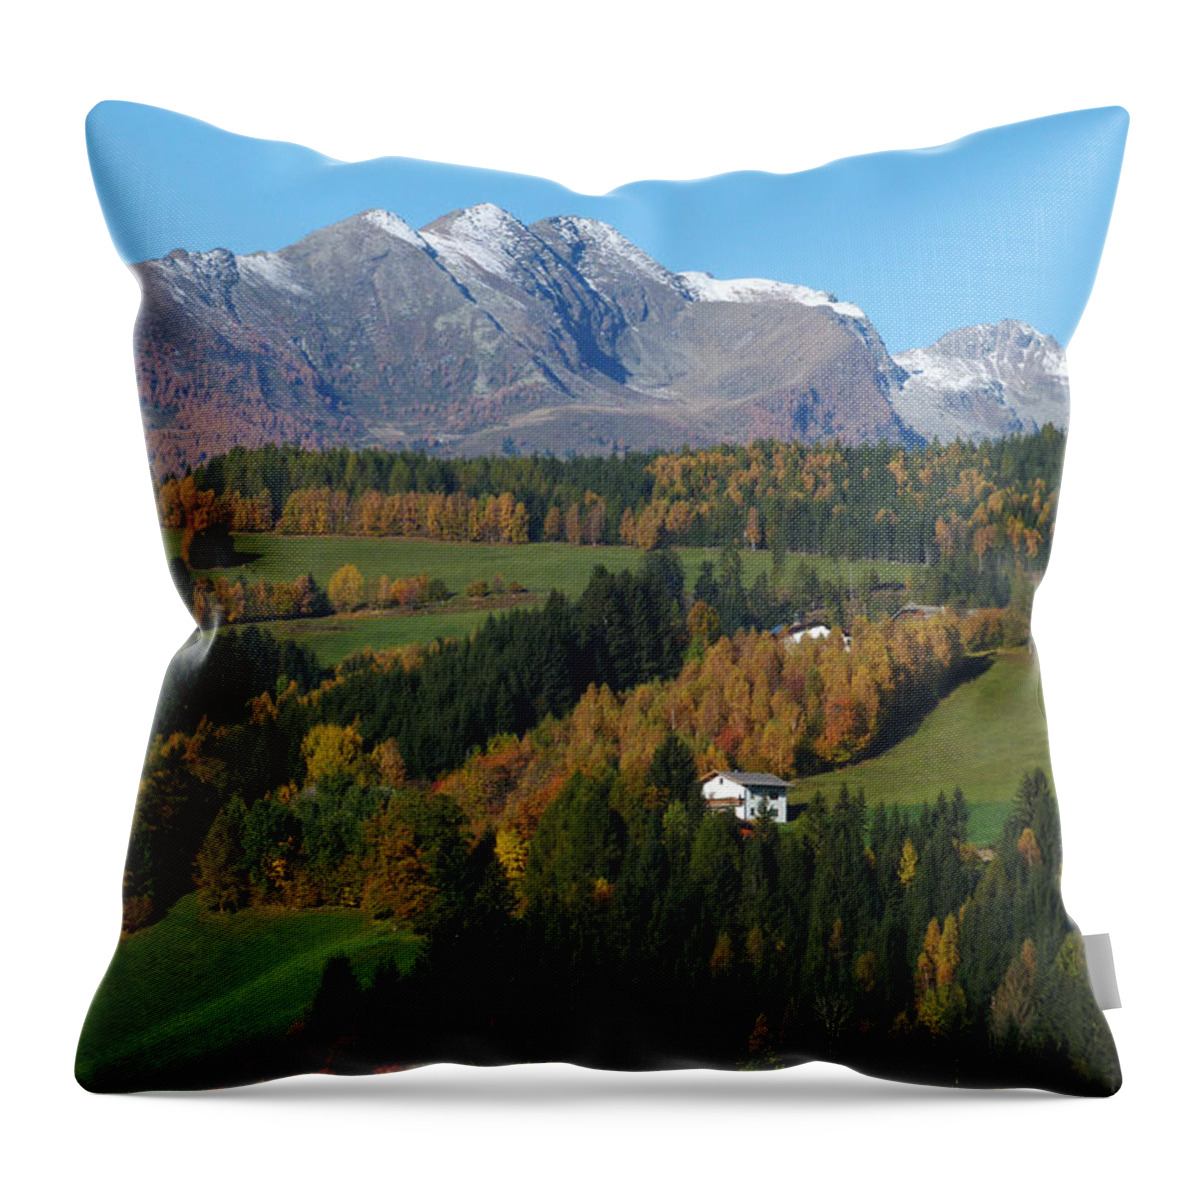 Austria Throw Pillow featuring the photograph Austrian Autumn by Phil Banks